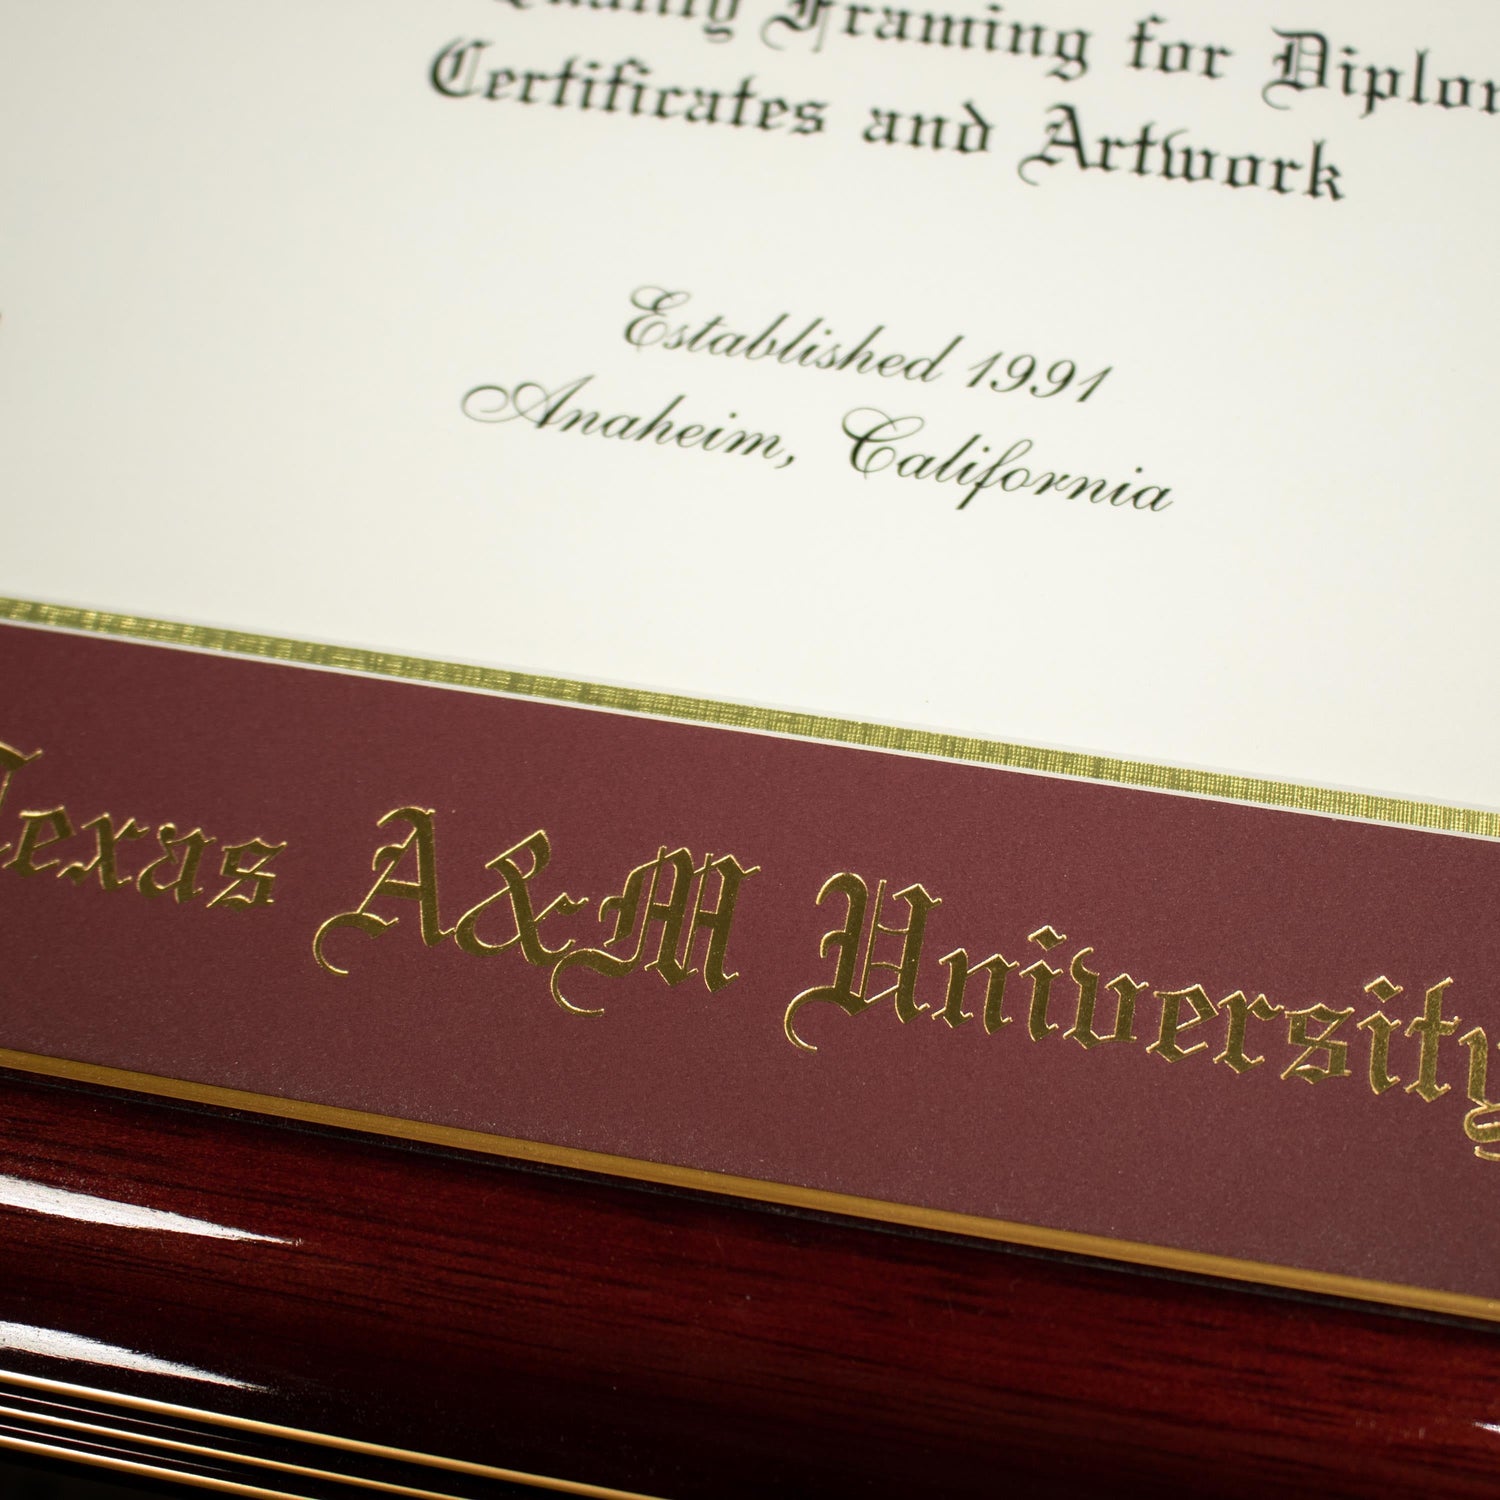 Special Order Item: University Frames Texas A&M Classic Medallion Diploma